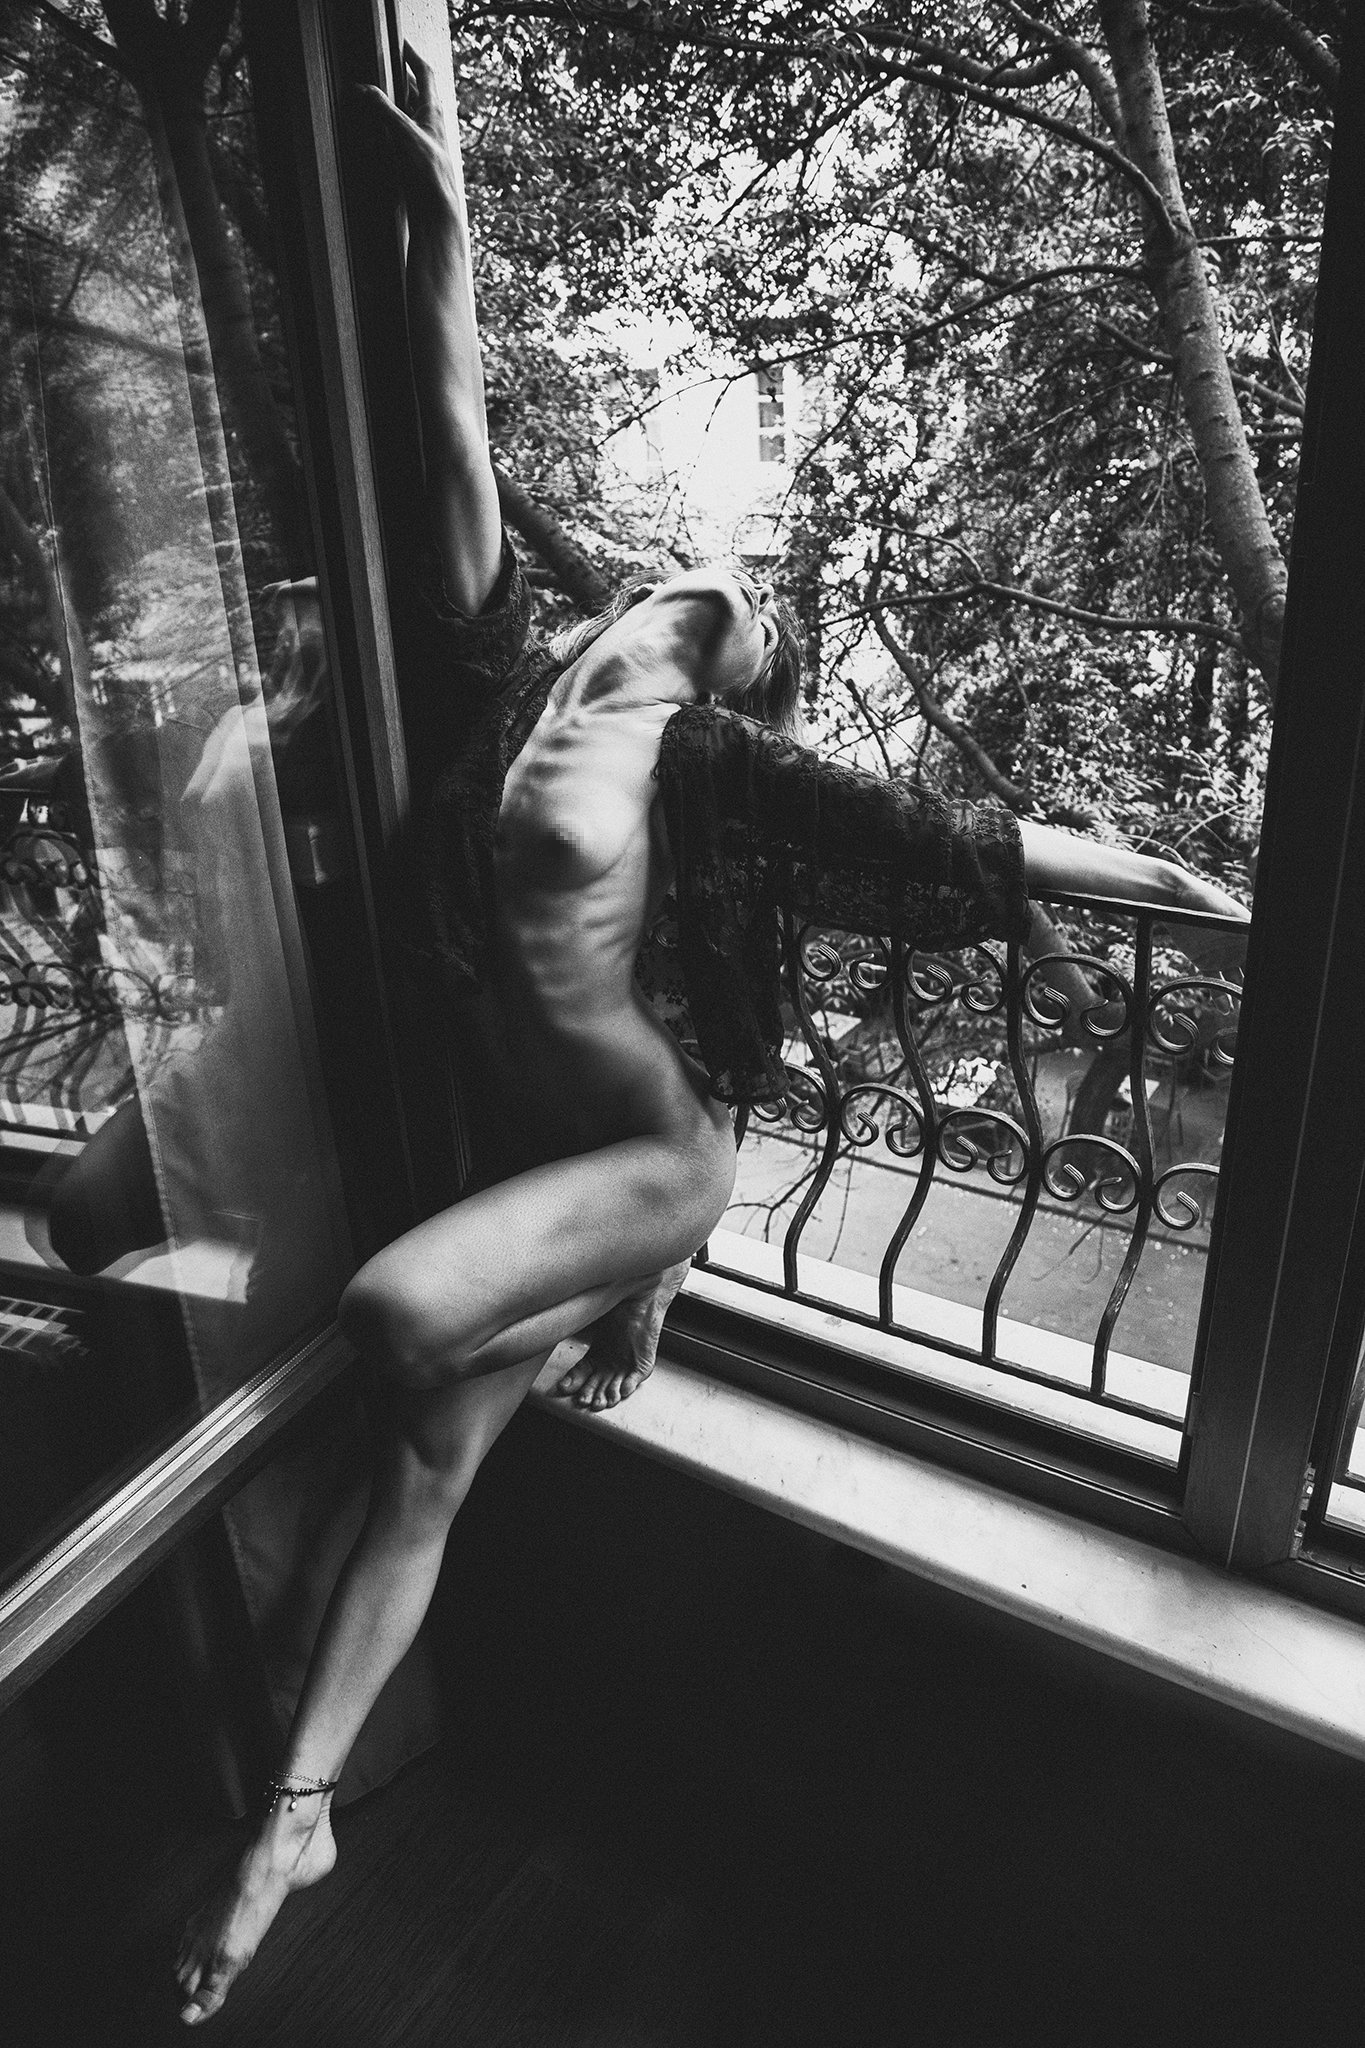 #minimalism #artnude #artpeople #framedart #paris #newyork #artforsale #erotic  #nude #berlin #amsterdam #moderart #nudephotography #artisticphotography #tokyo  #blackandwhitephotography #details #beauty #sensual #sensuality #model #artphotography #art #f, Aleksandar Manchev